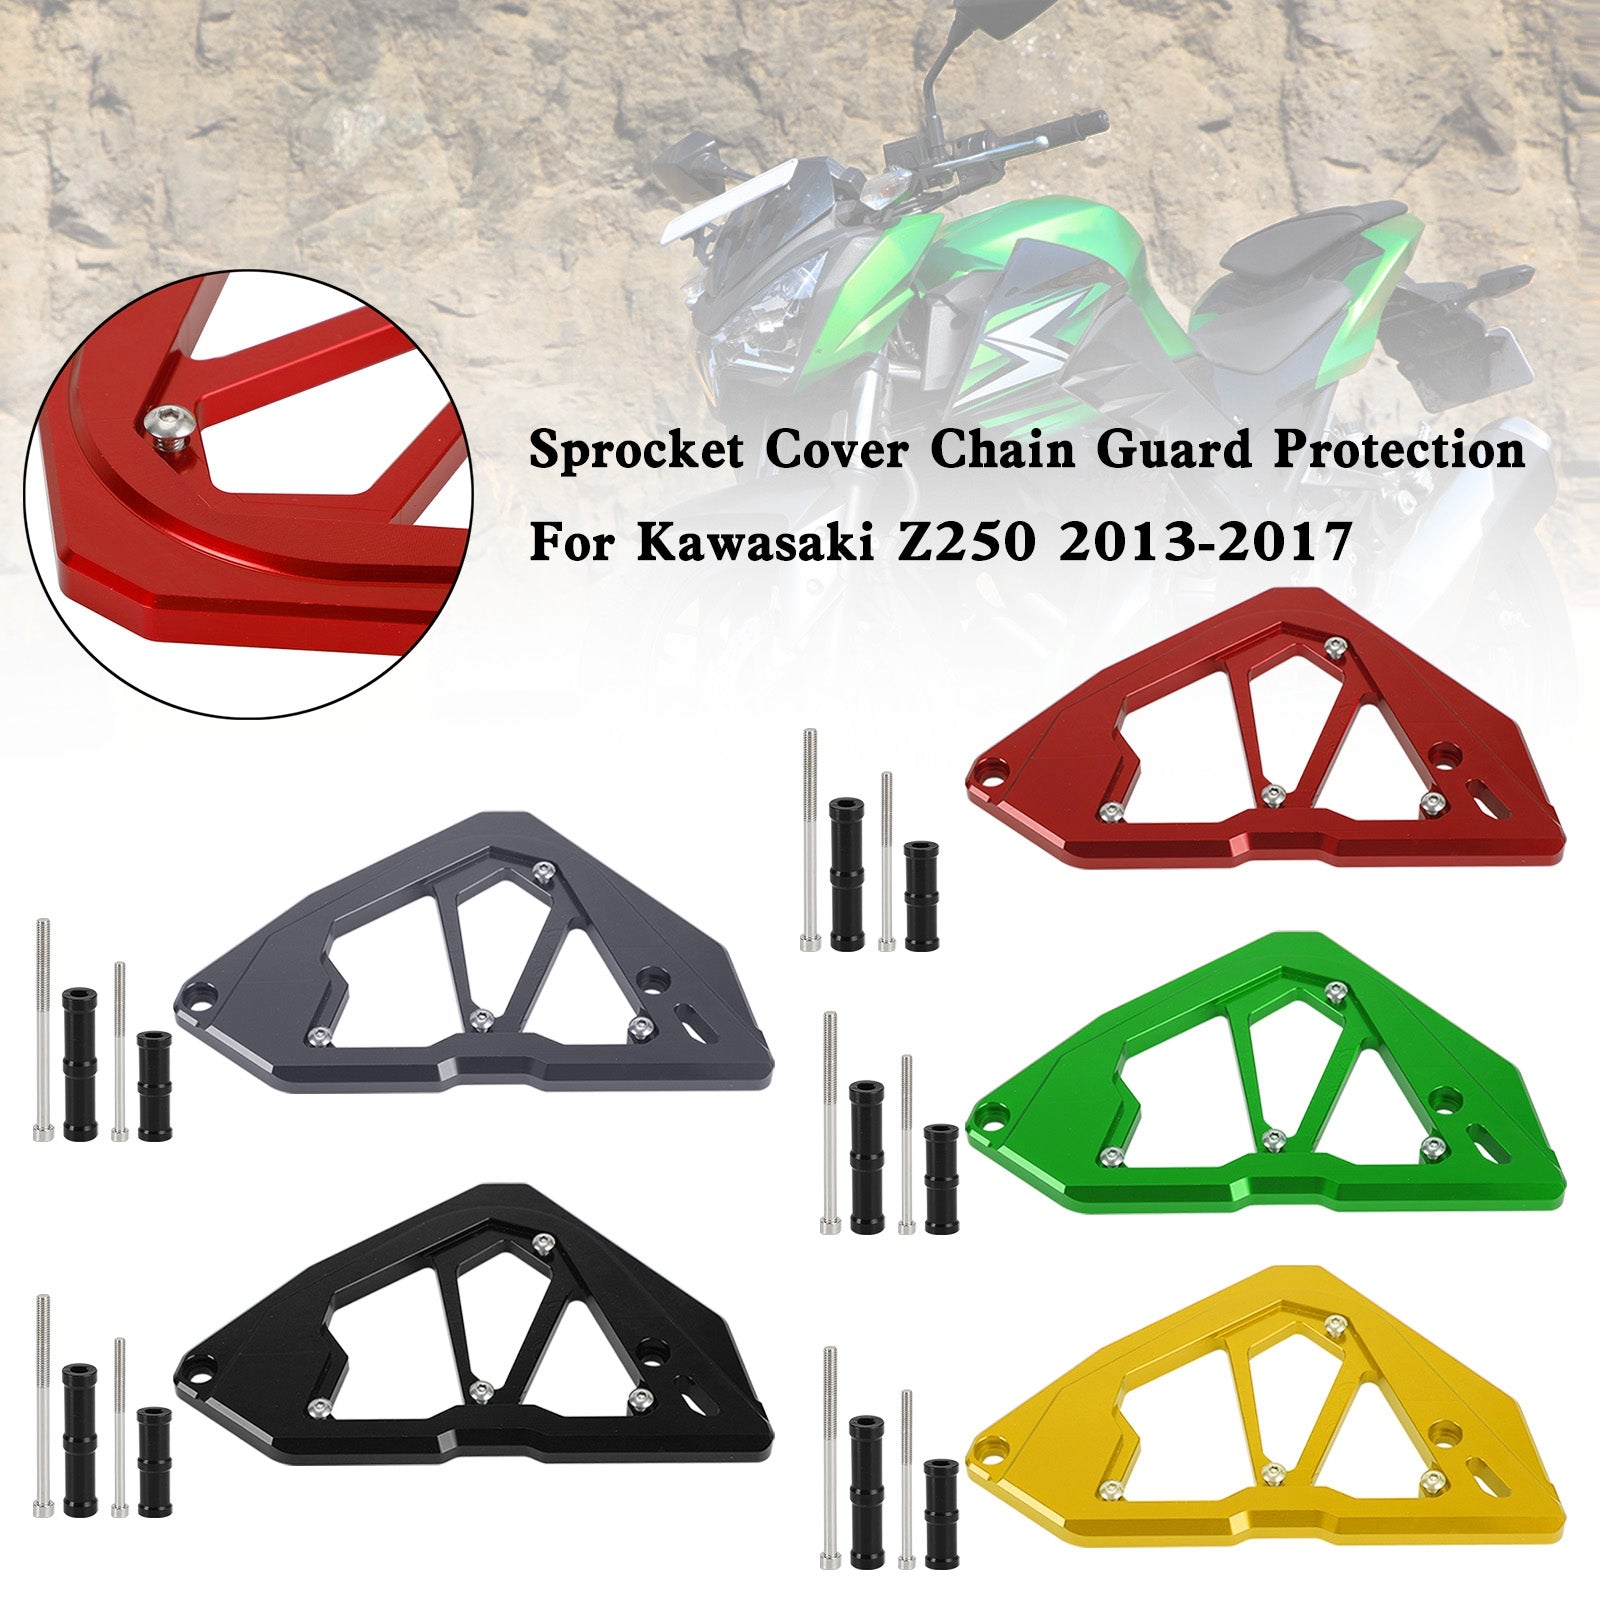 Kettenradabdeckung Kettenschutz für KAWASAKI Z250 Z300 NINJA 300 250 13-17